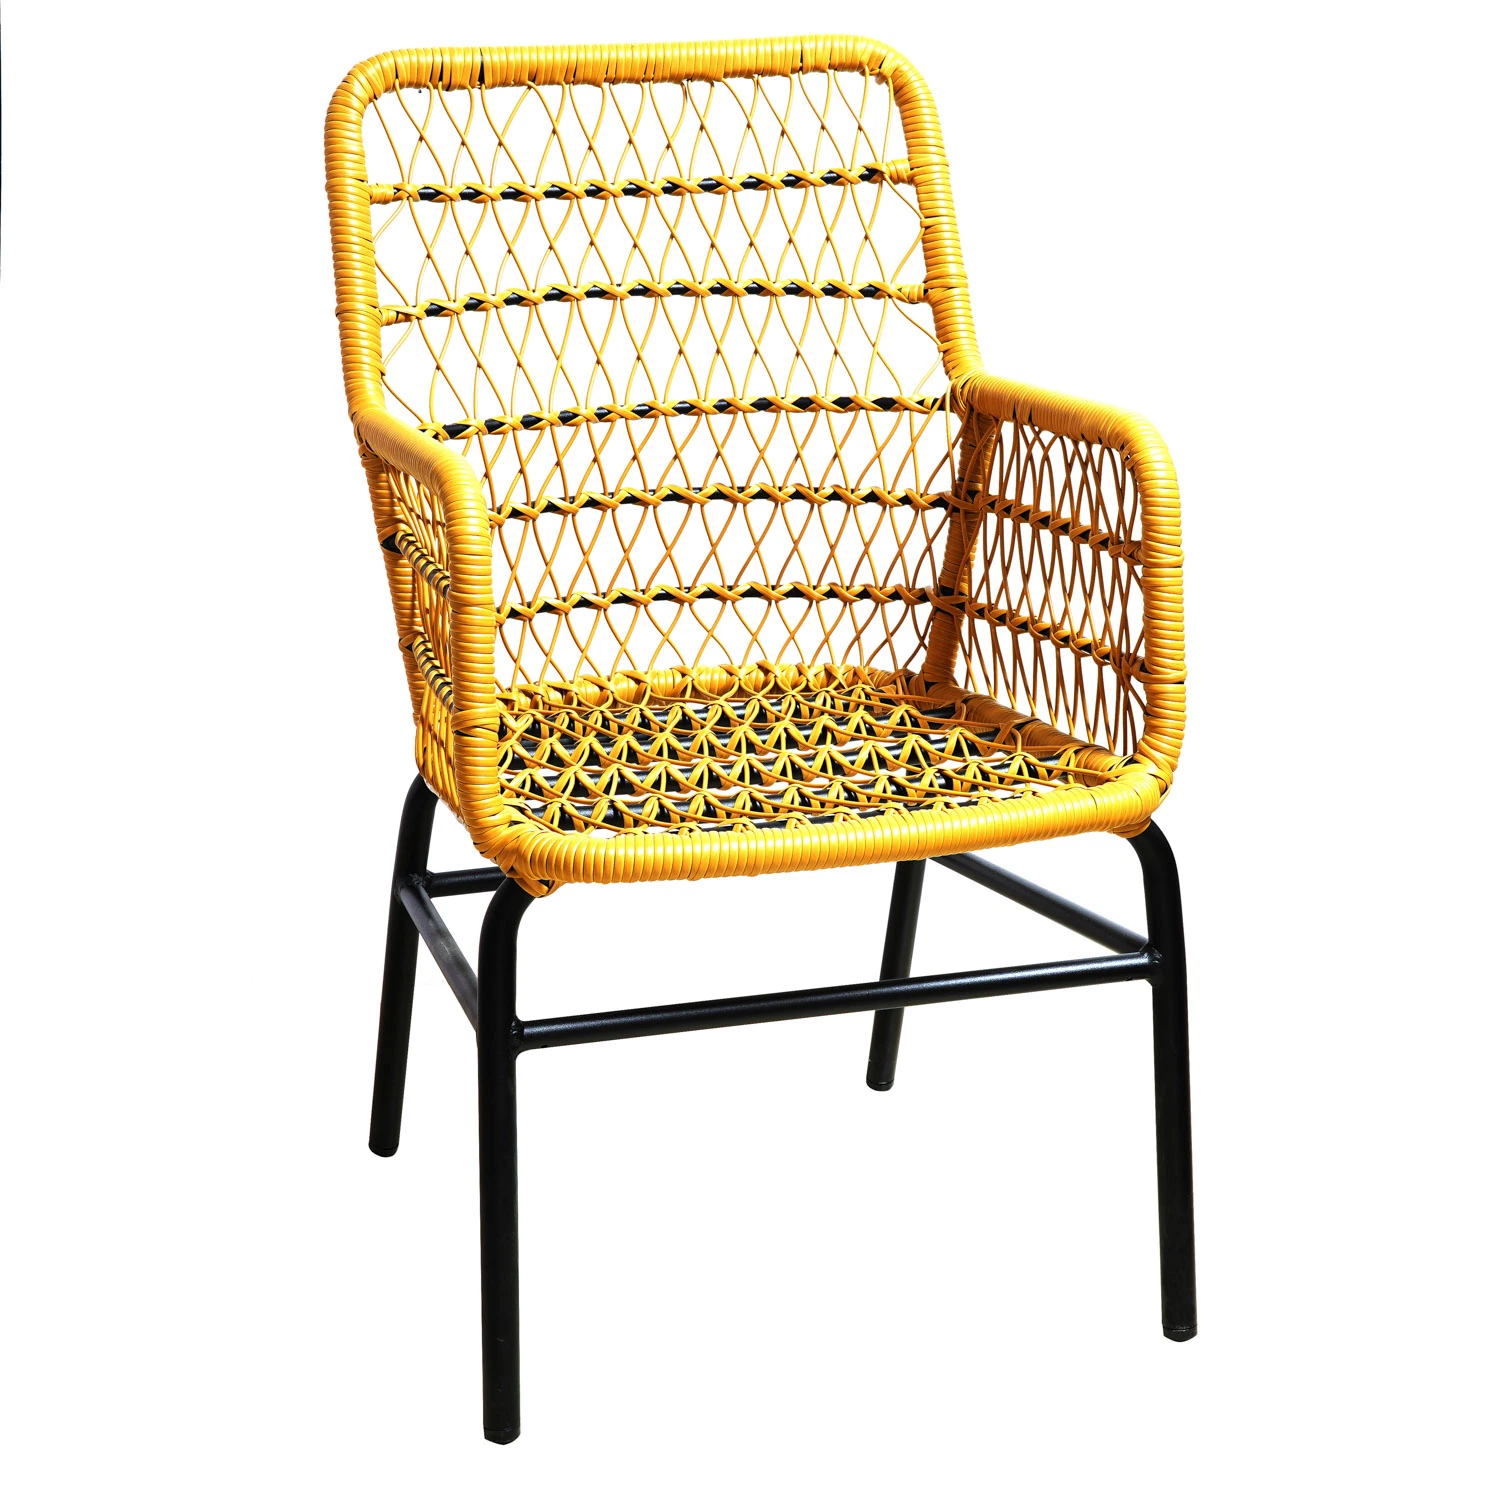 Hot Selling Modern Rattan Wicker Furniture Sets Outdoor Rattan Garden Chair